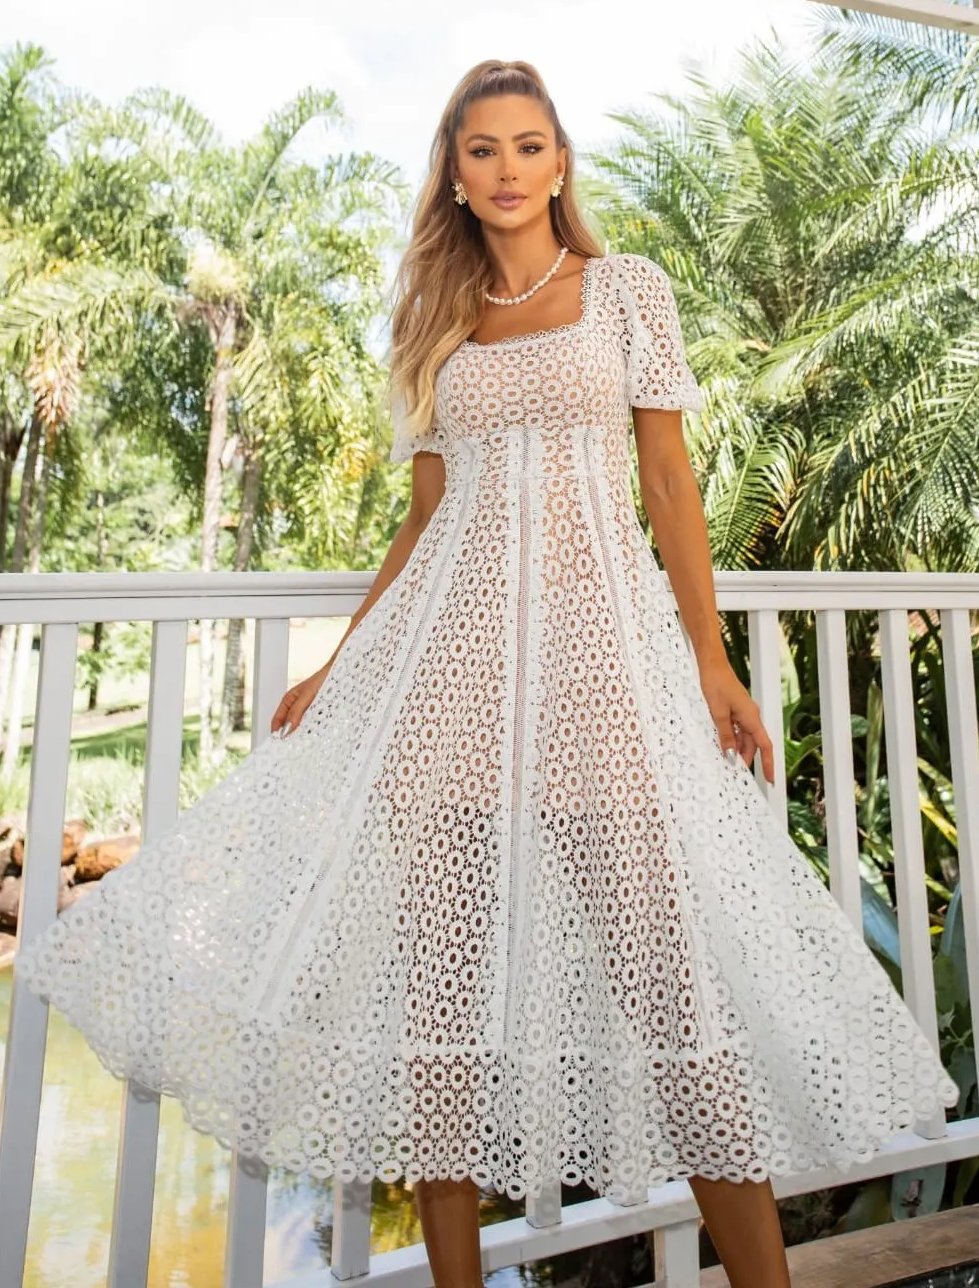 Off-White Lace Dress